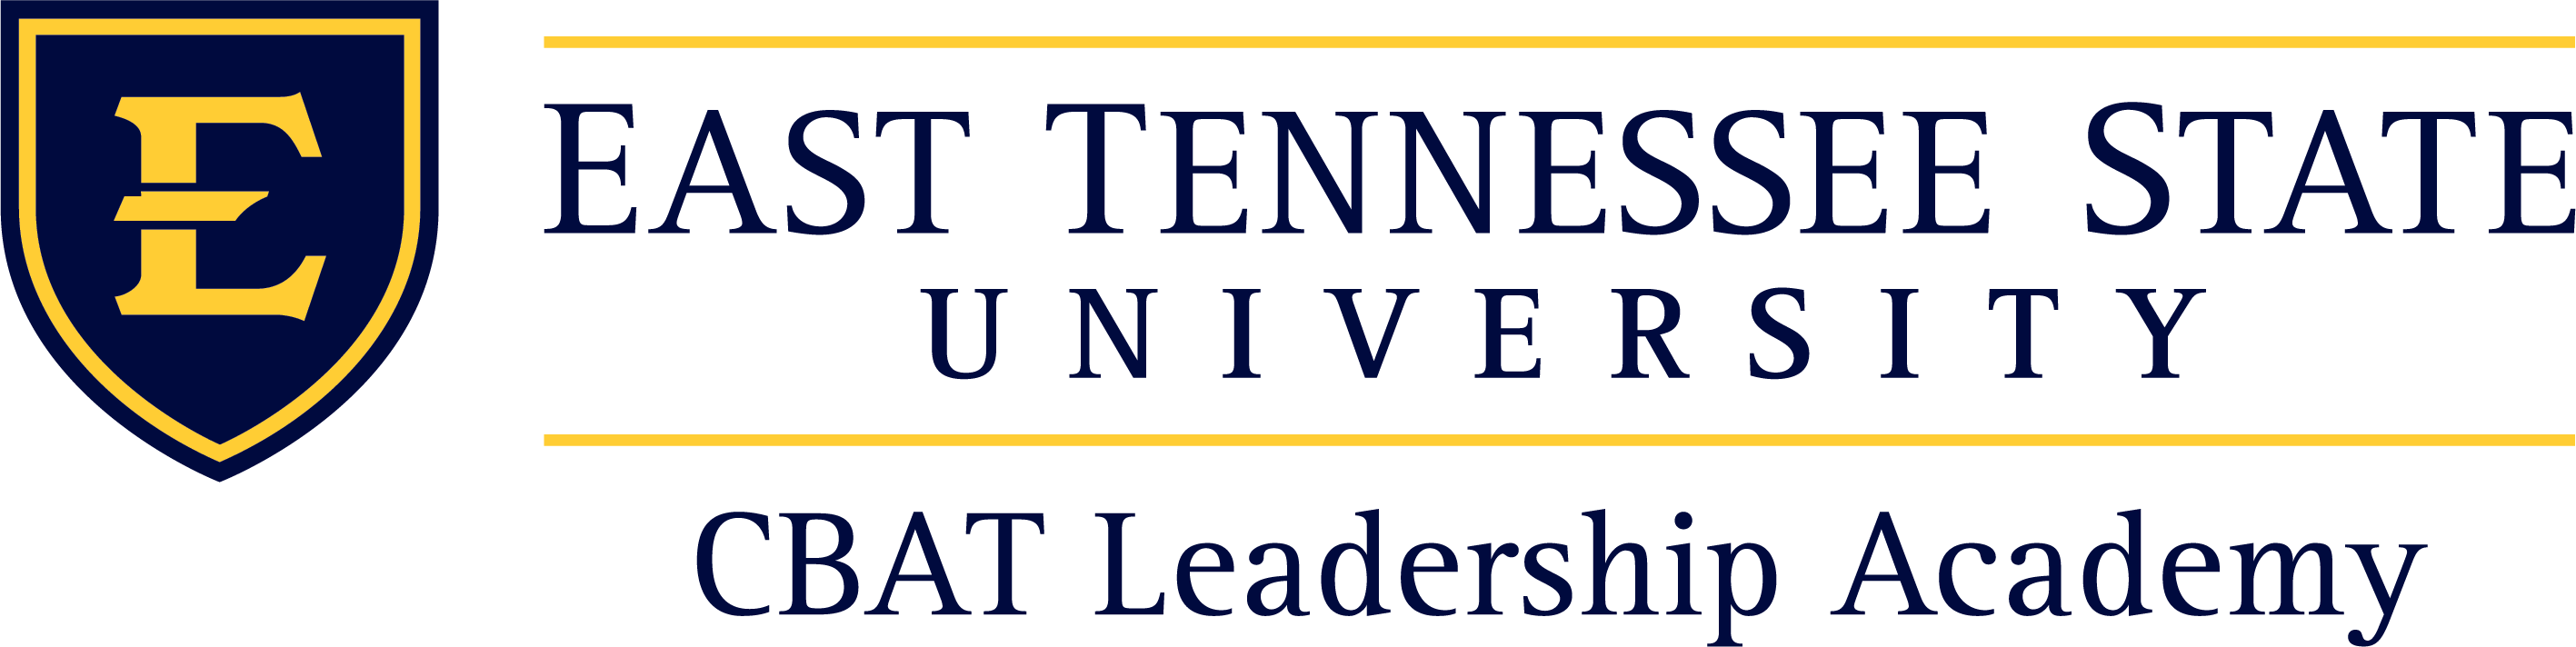 leadership academy logo